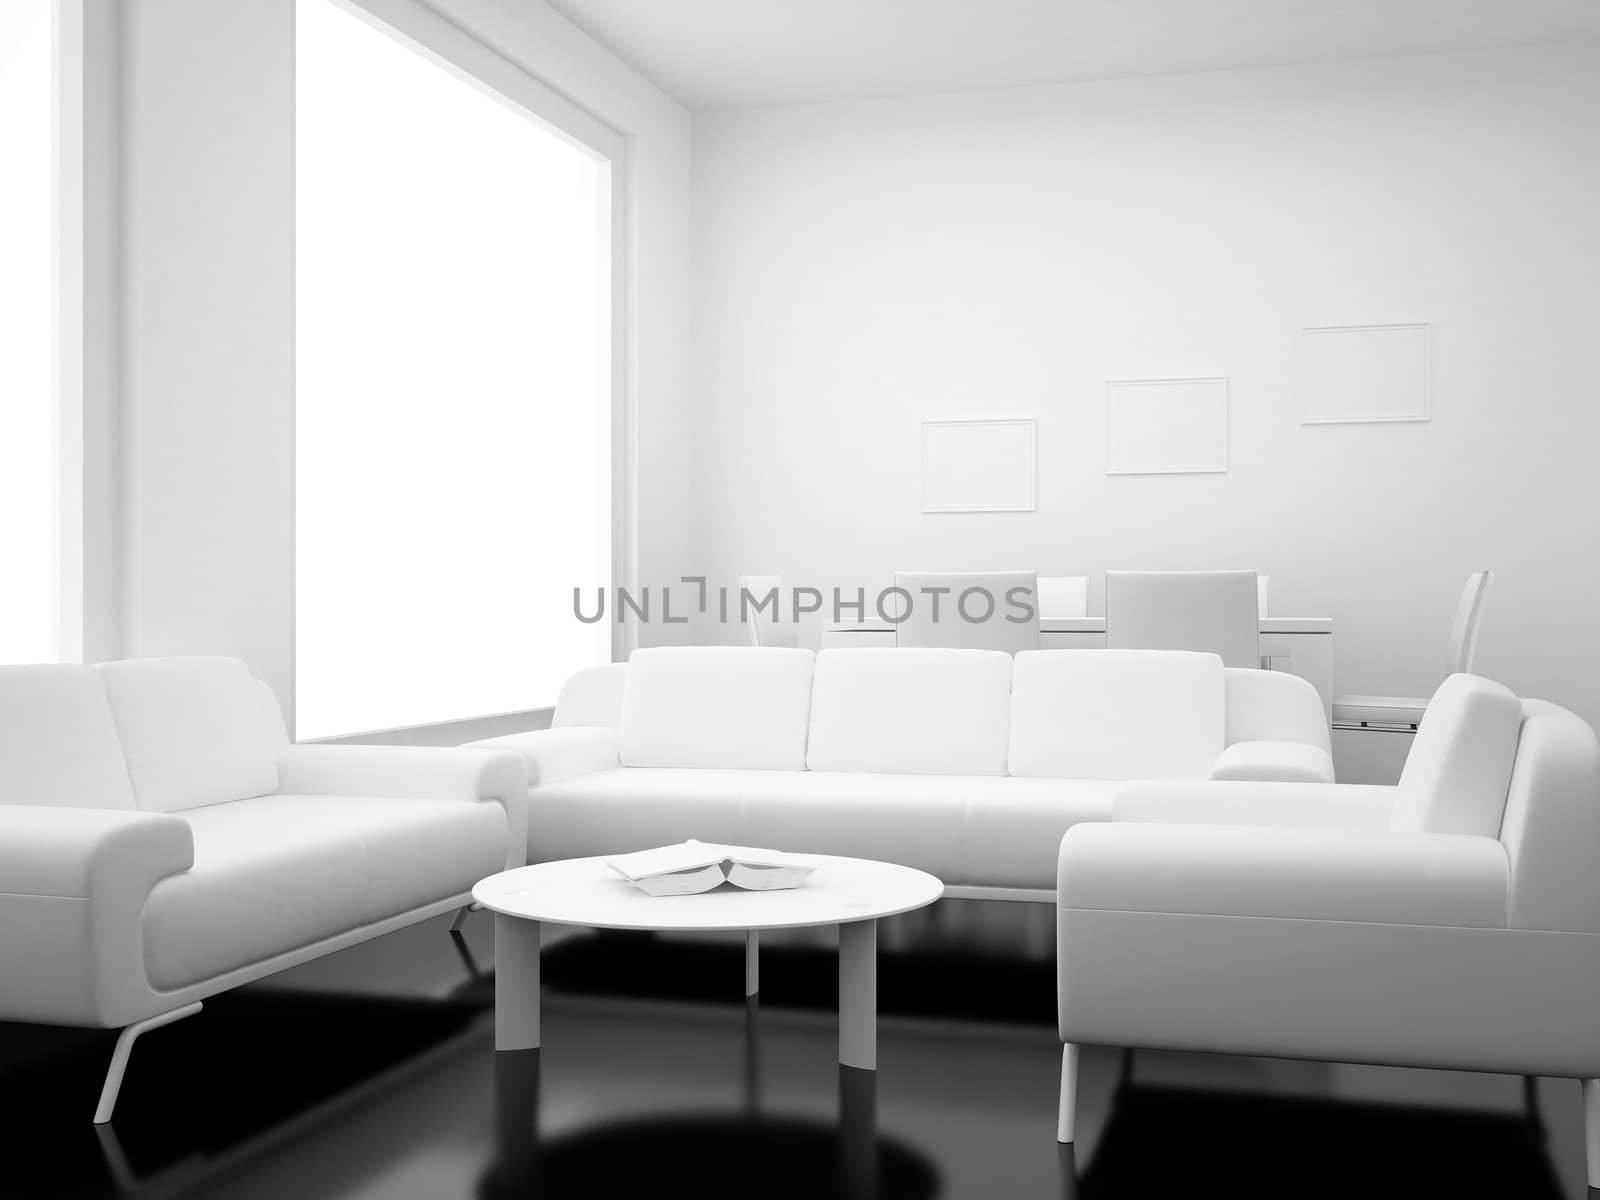 High resolution image. 3d rendered illustration. Interior of the modern room.